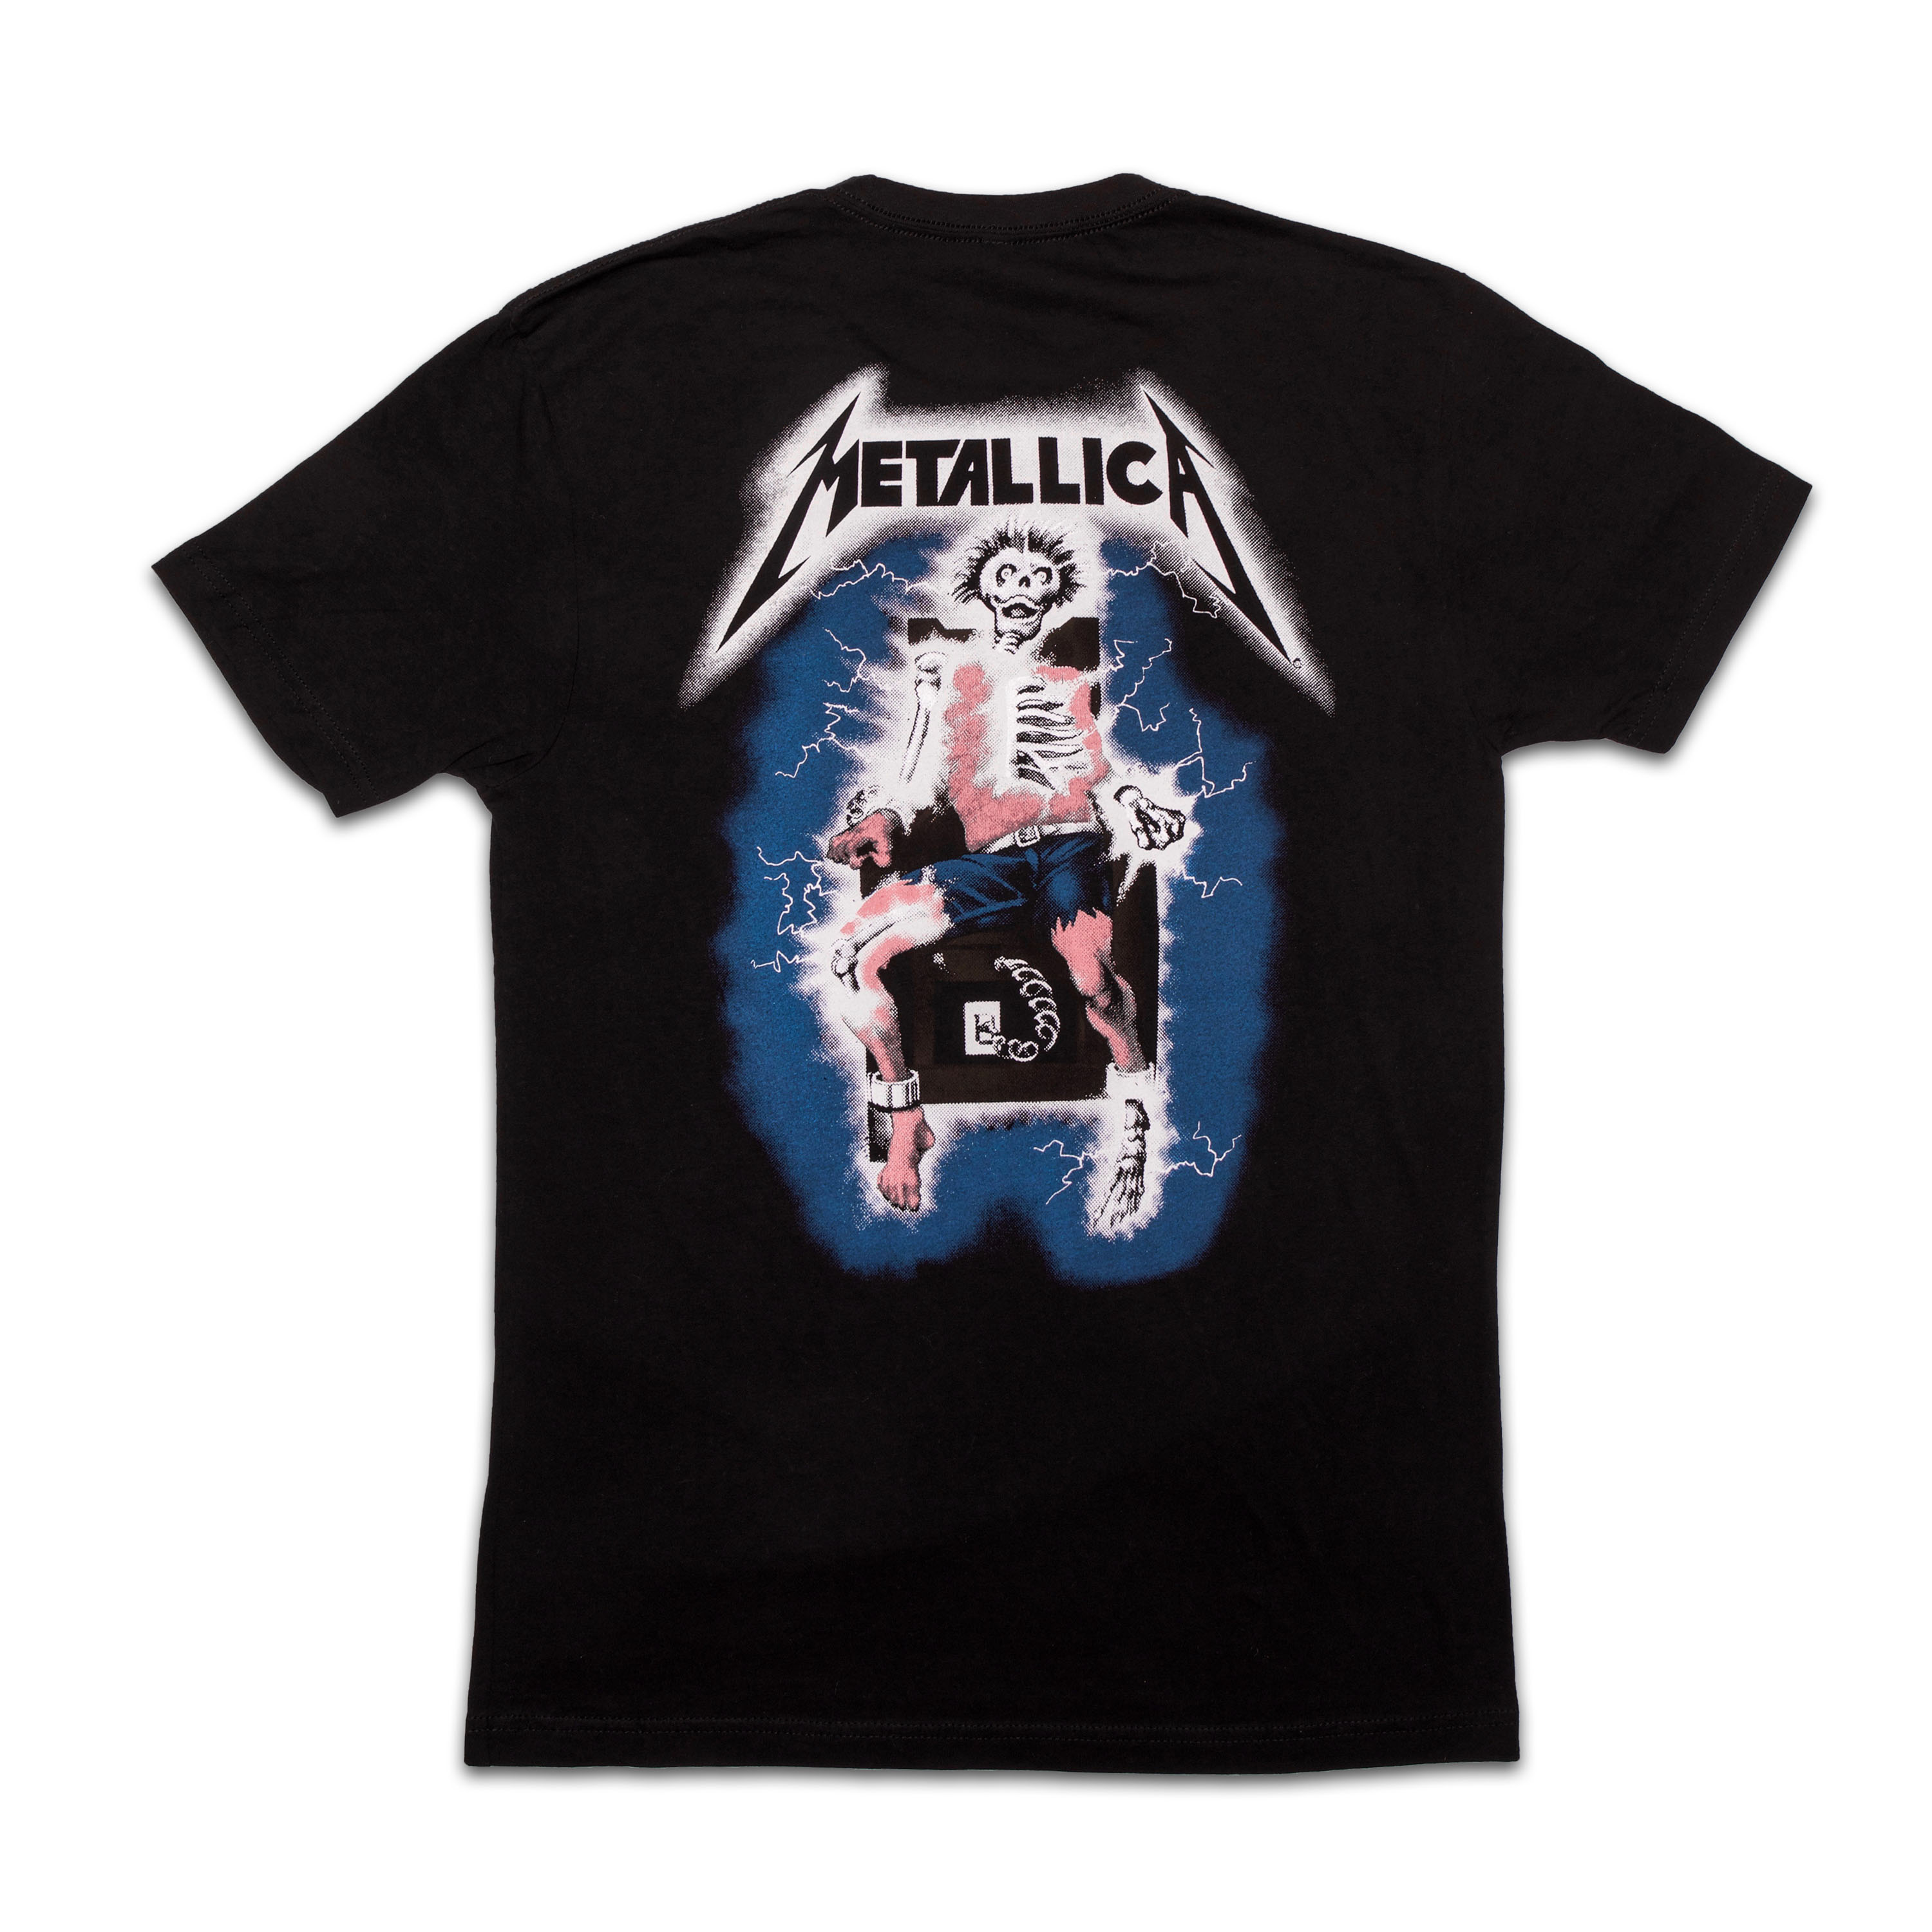 Electrifying Metallica: Ride the Lightning T-Shirt - Vintage Band Shirts